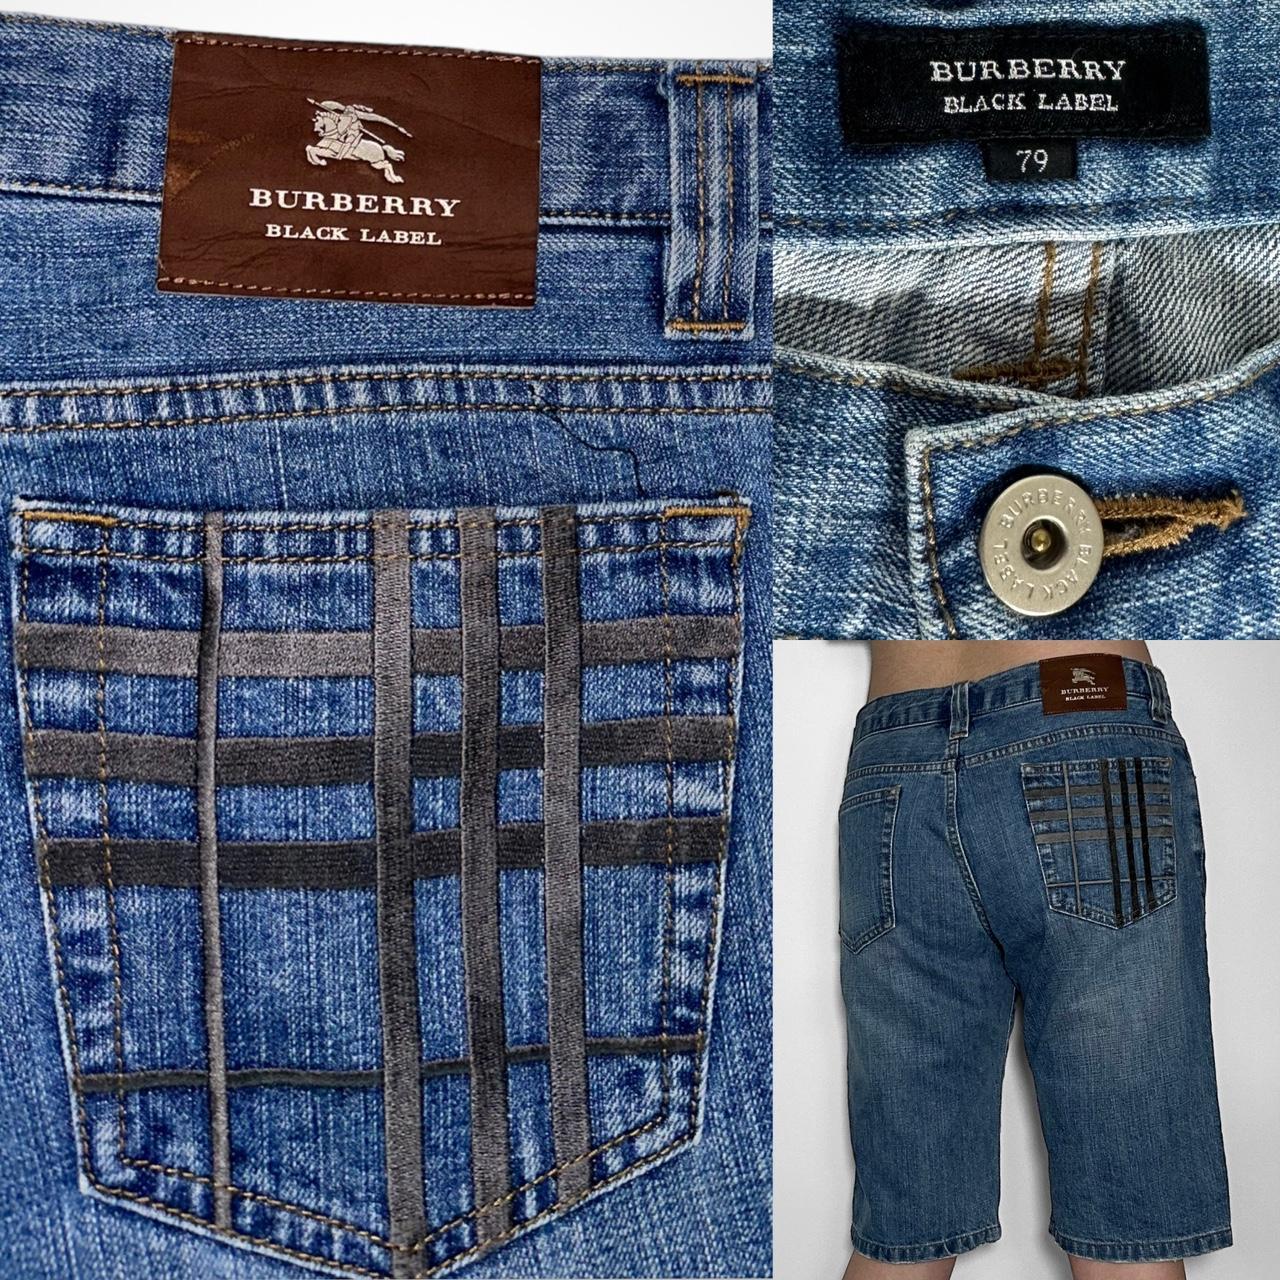 Vintage 90s Burberry Black Label denim Bermuda shorts with nova check pocket